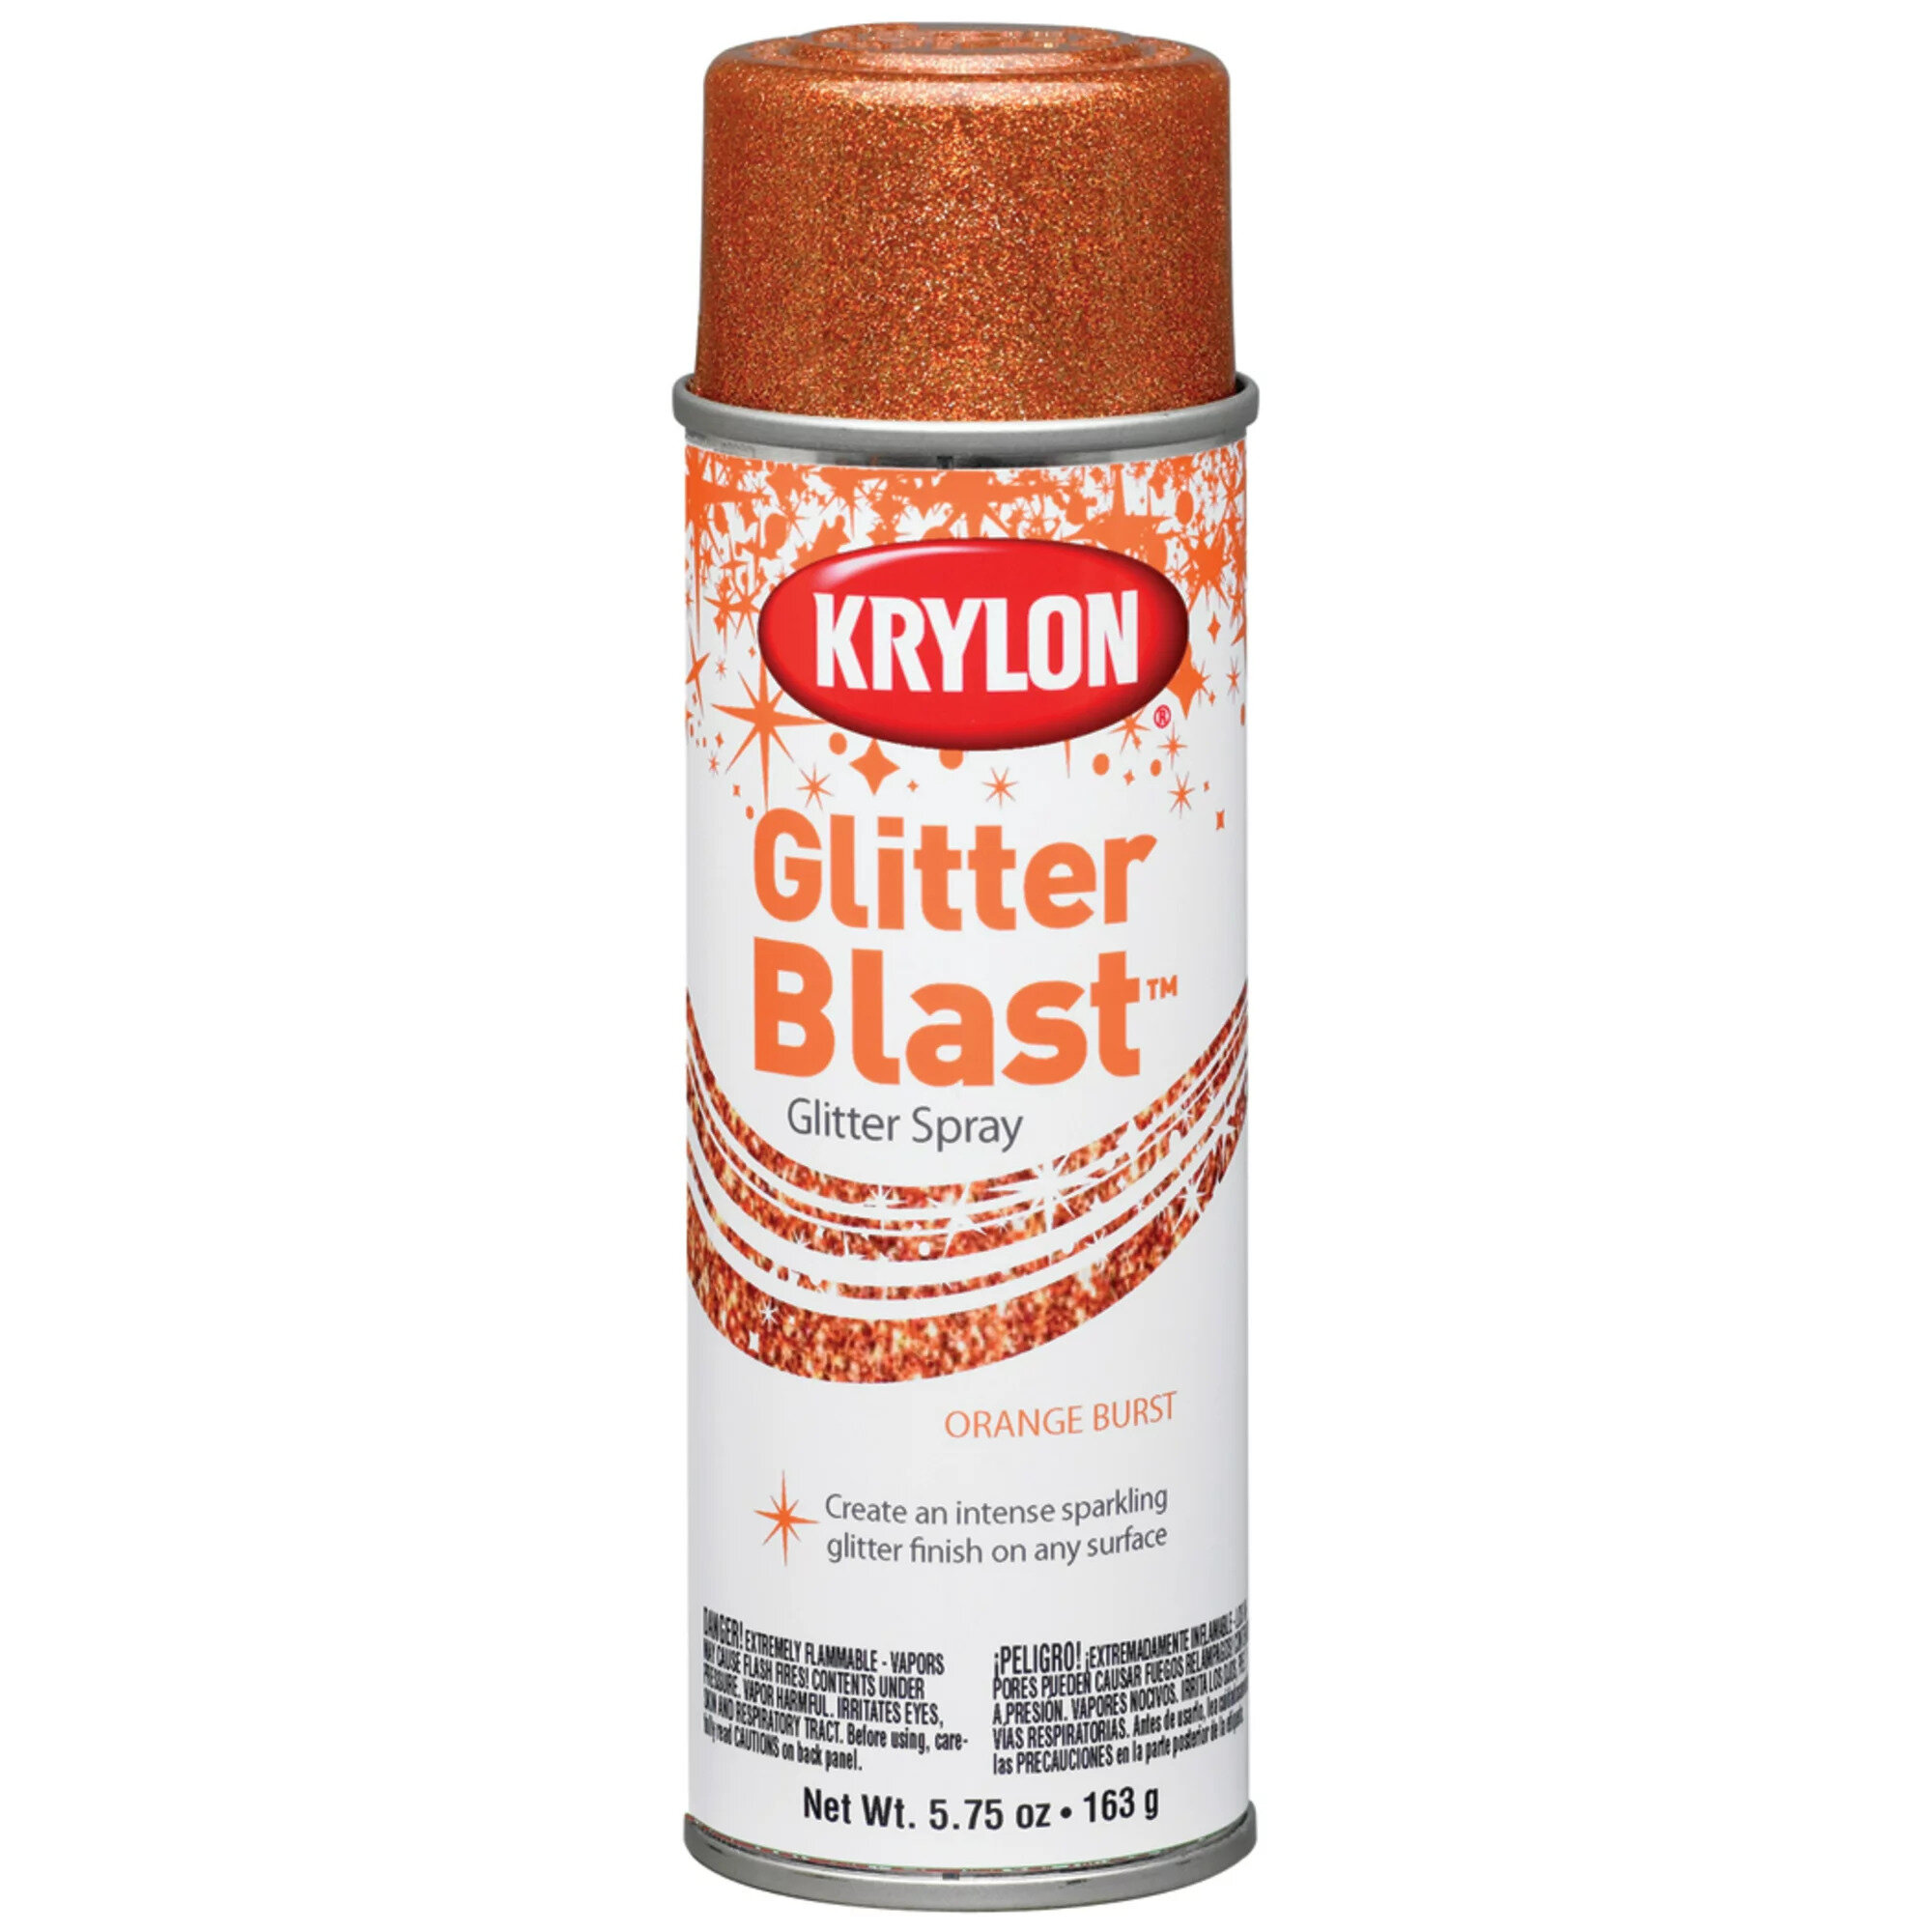 Krylon Glitter Blast Spray - аэрозольный баллончик с блестками "3D Глиттер", orange burst, 163г - фотография № 1